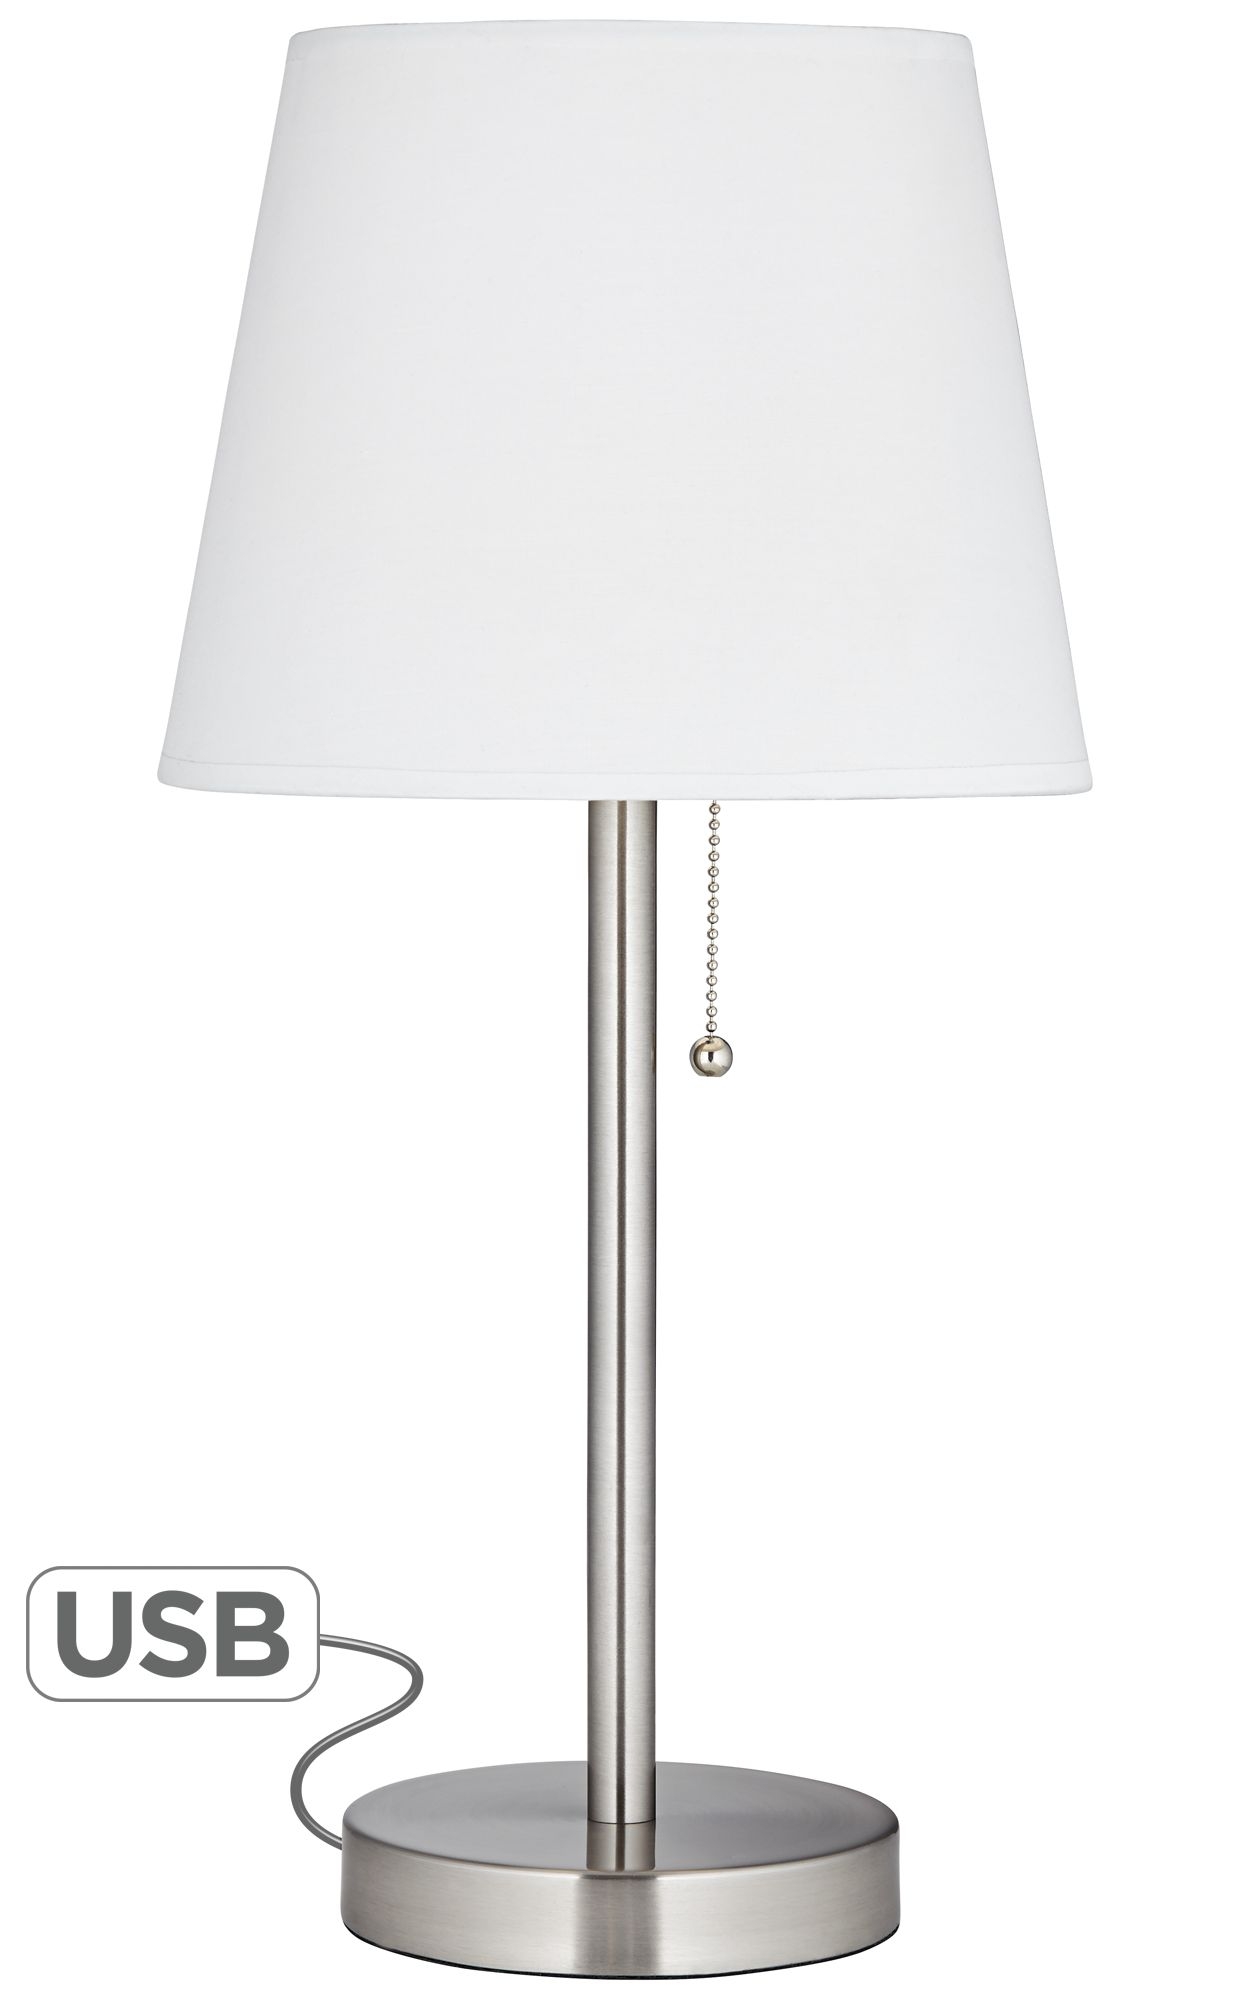 Flesner Brushed Steel Accent Table Lamp - Image 0